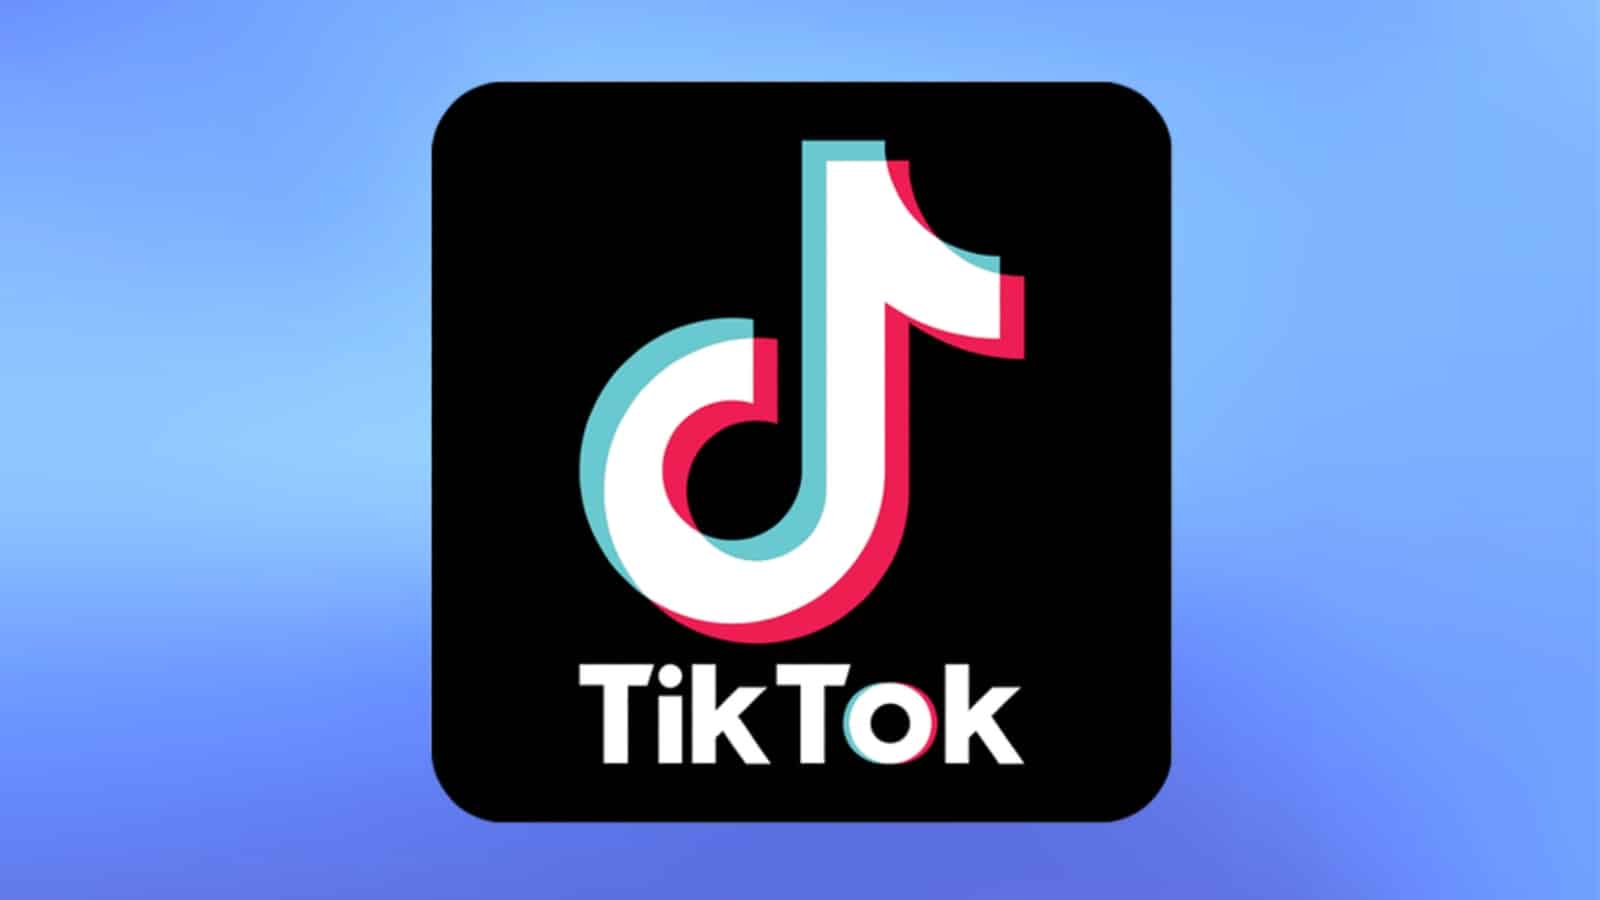 An image of the tiktok logo